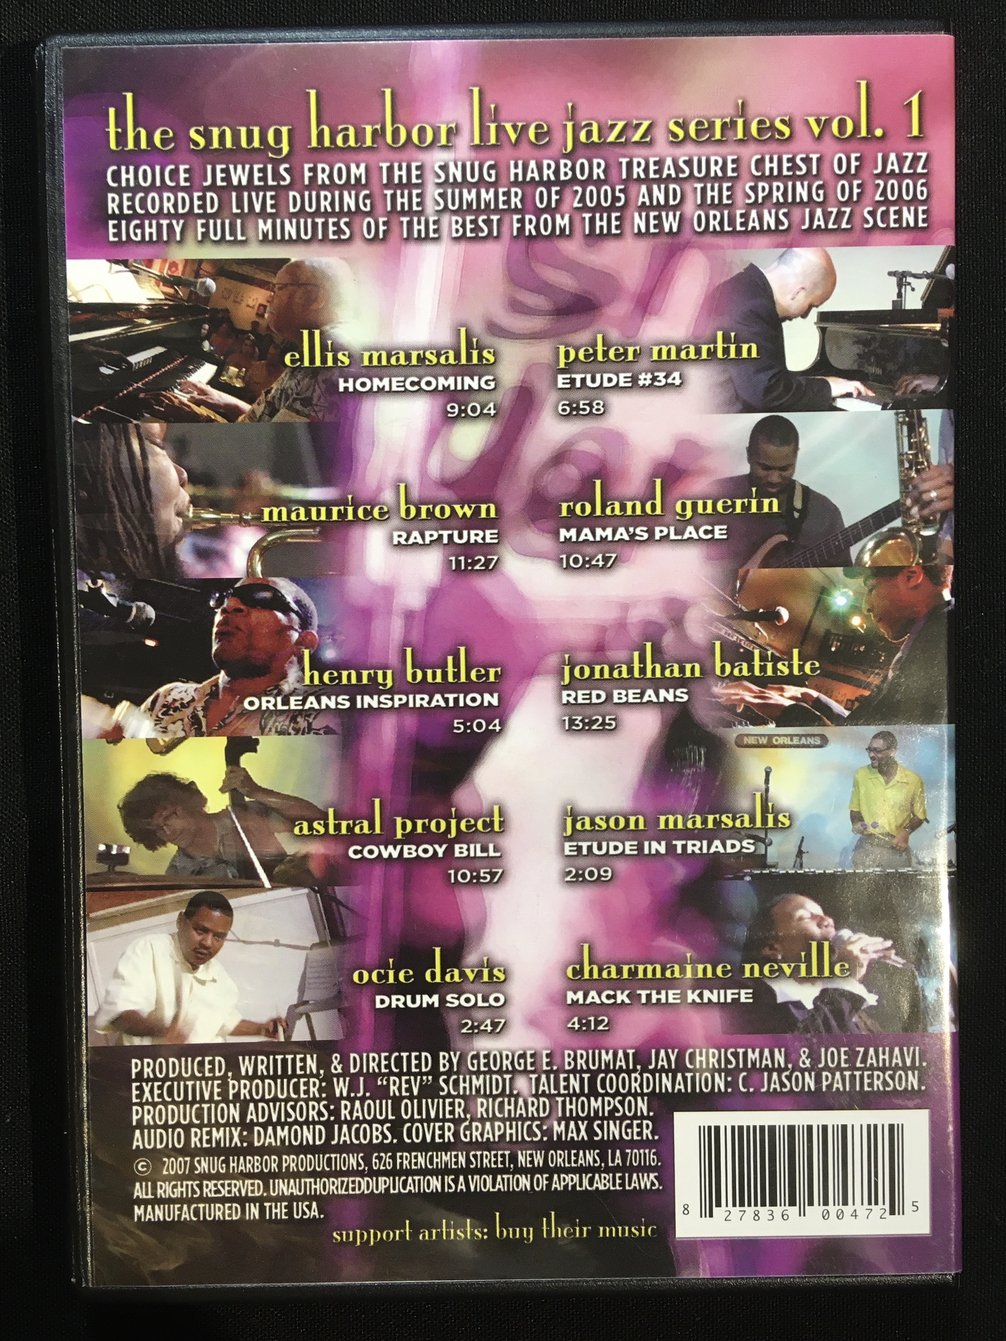 The Snug Harbor Live Jazz Series vol. 1 DVD